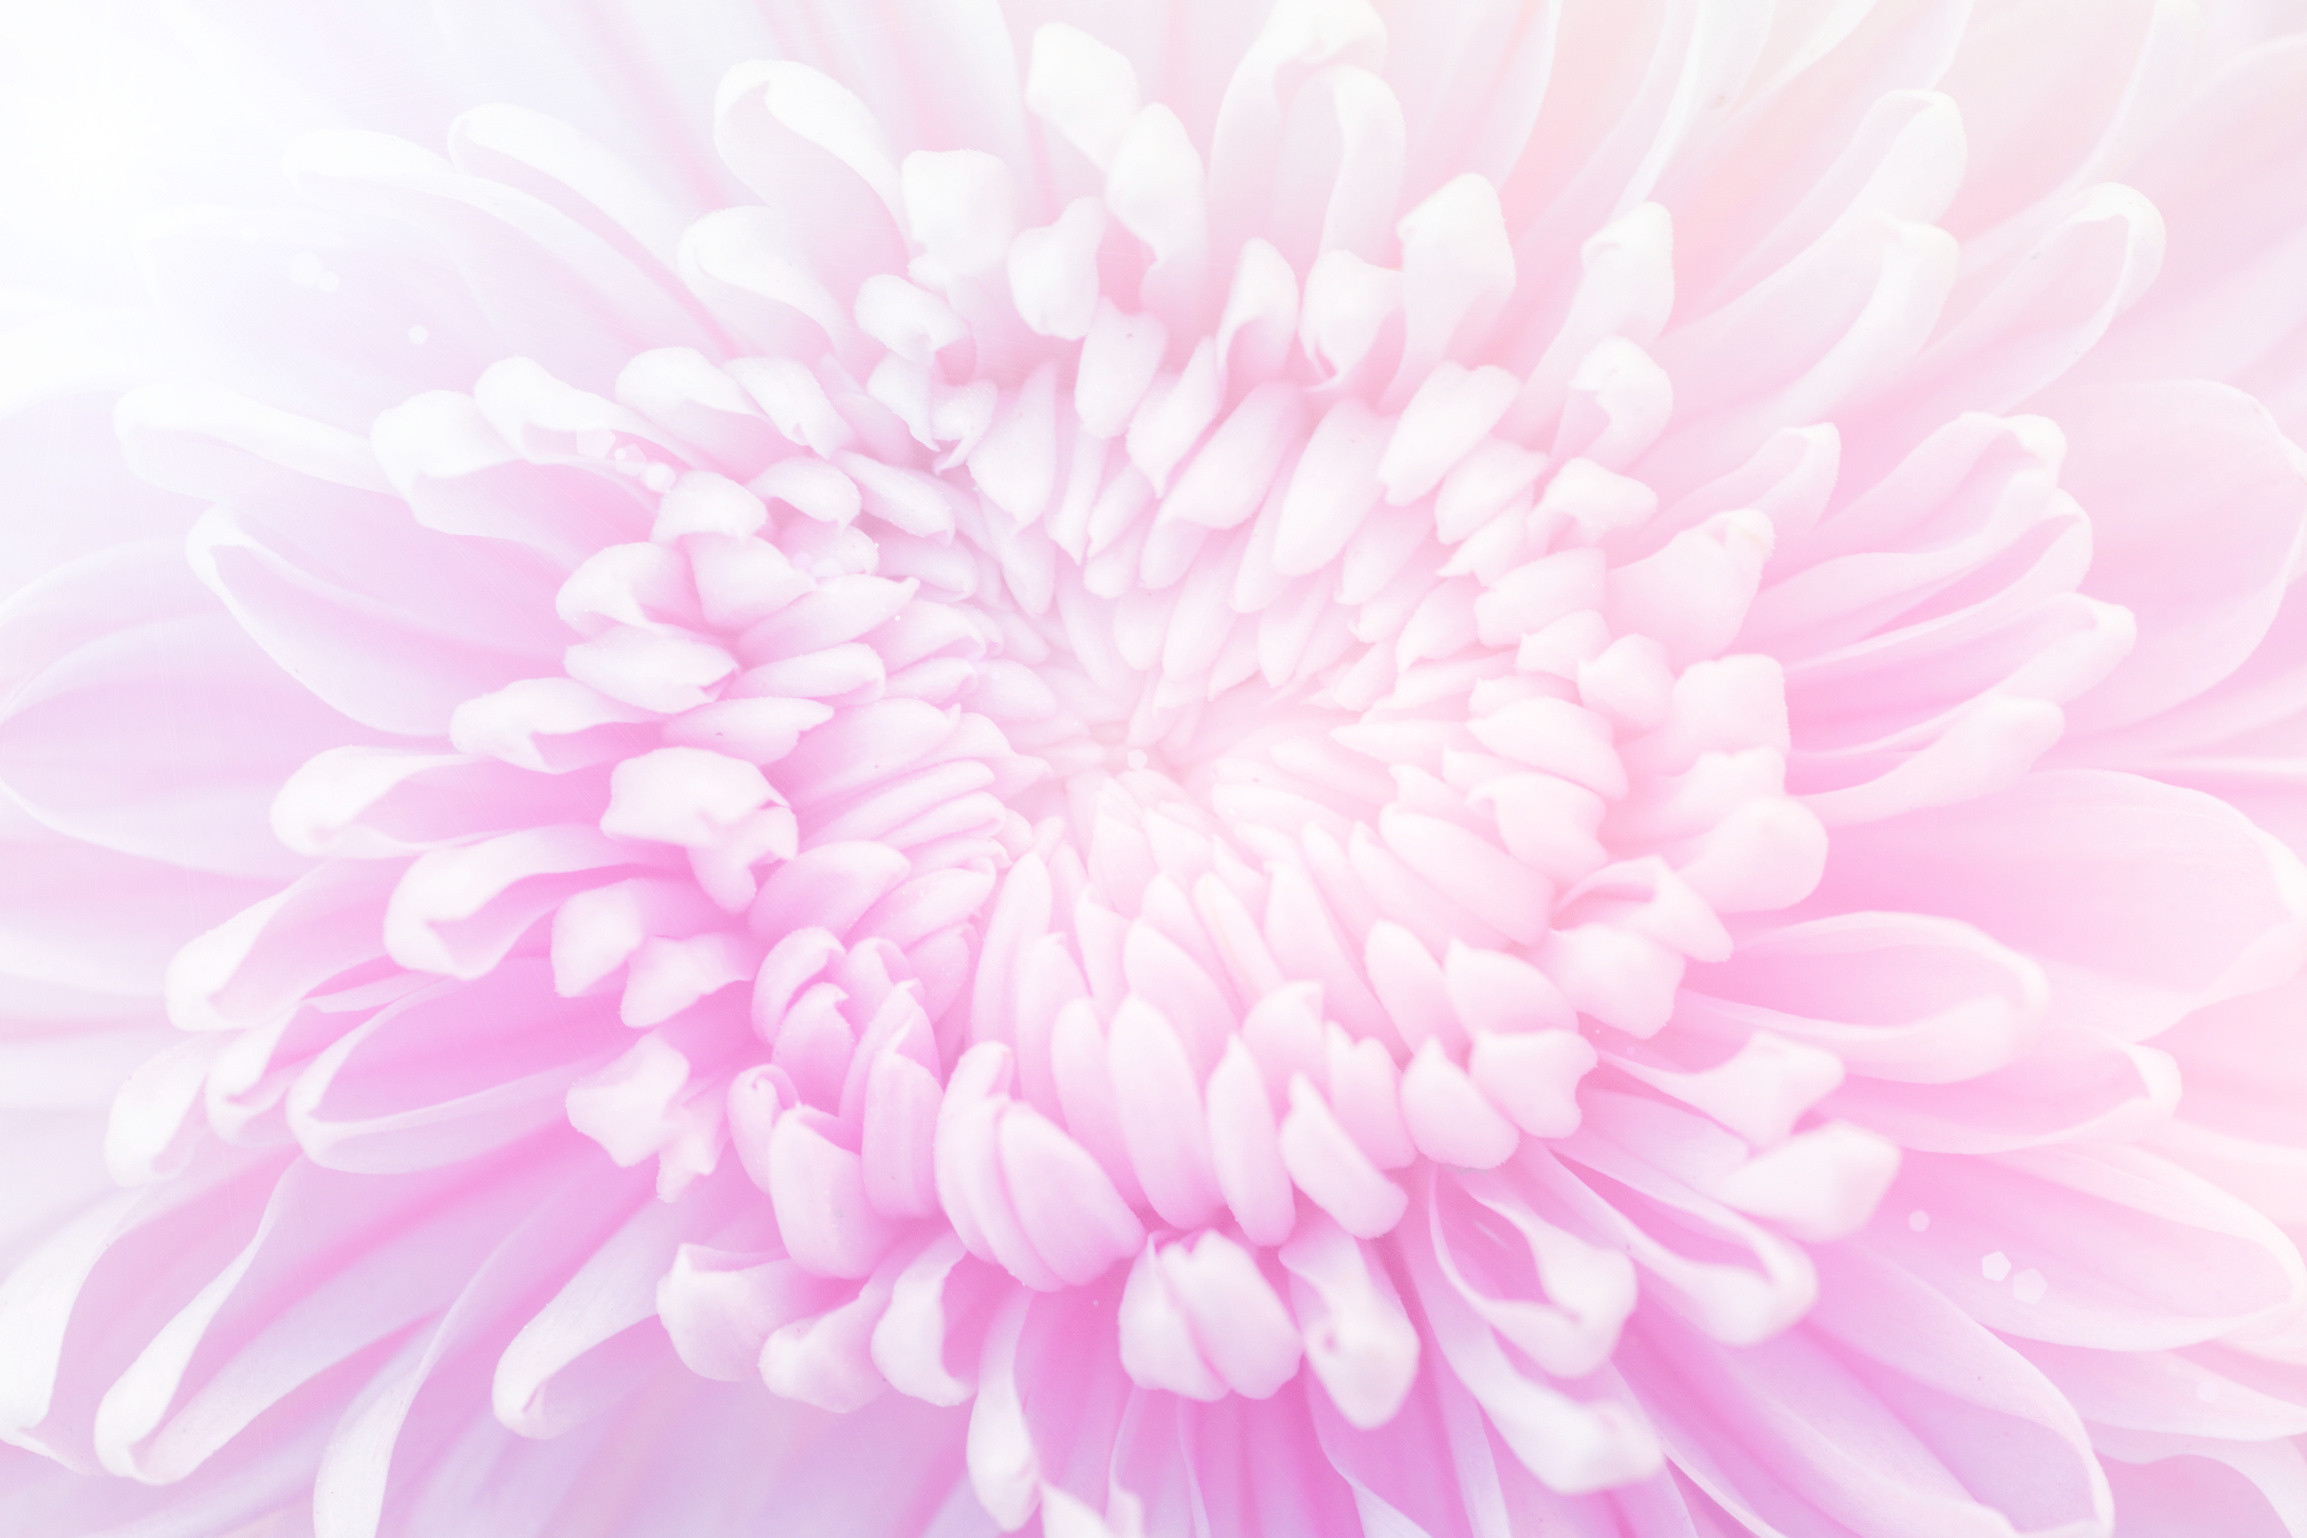 Pink Carnation Flower